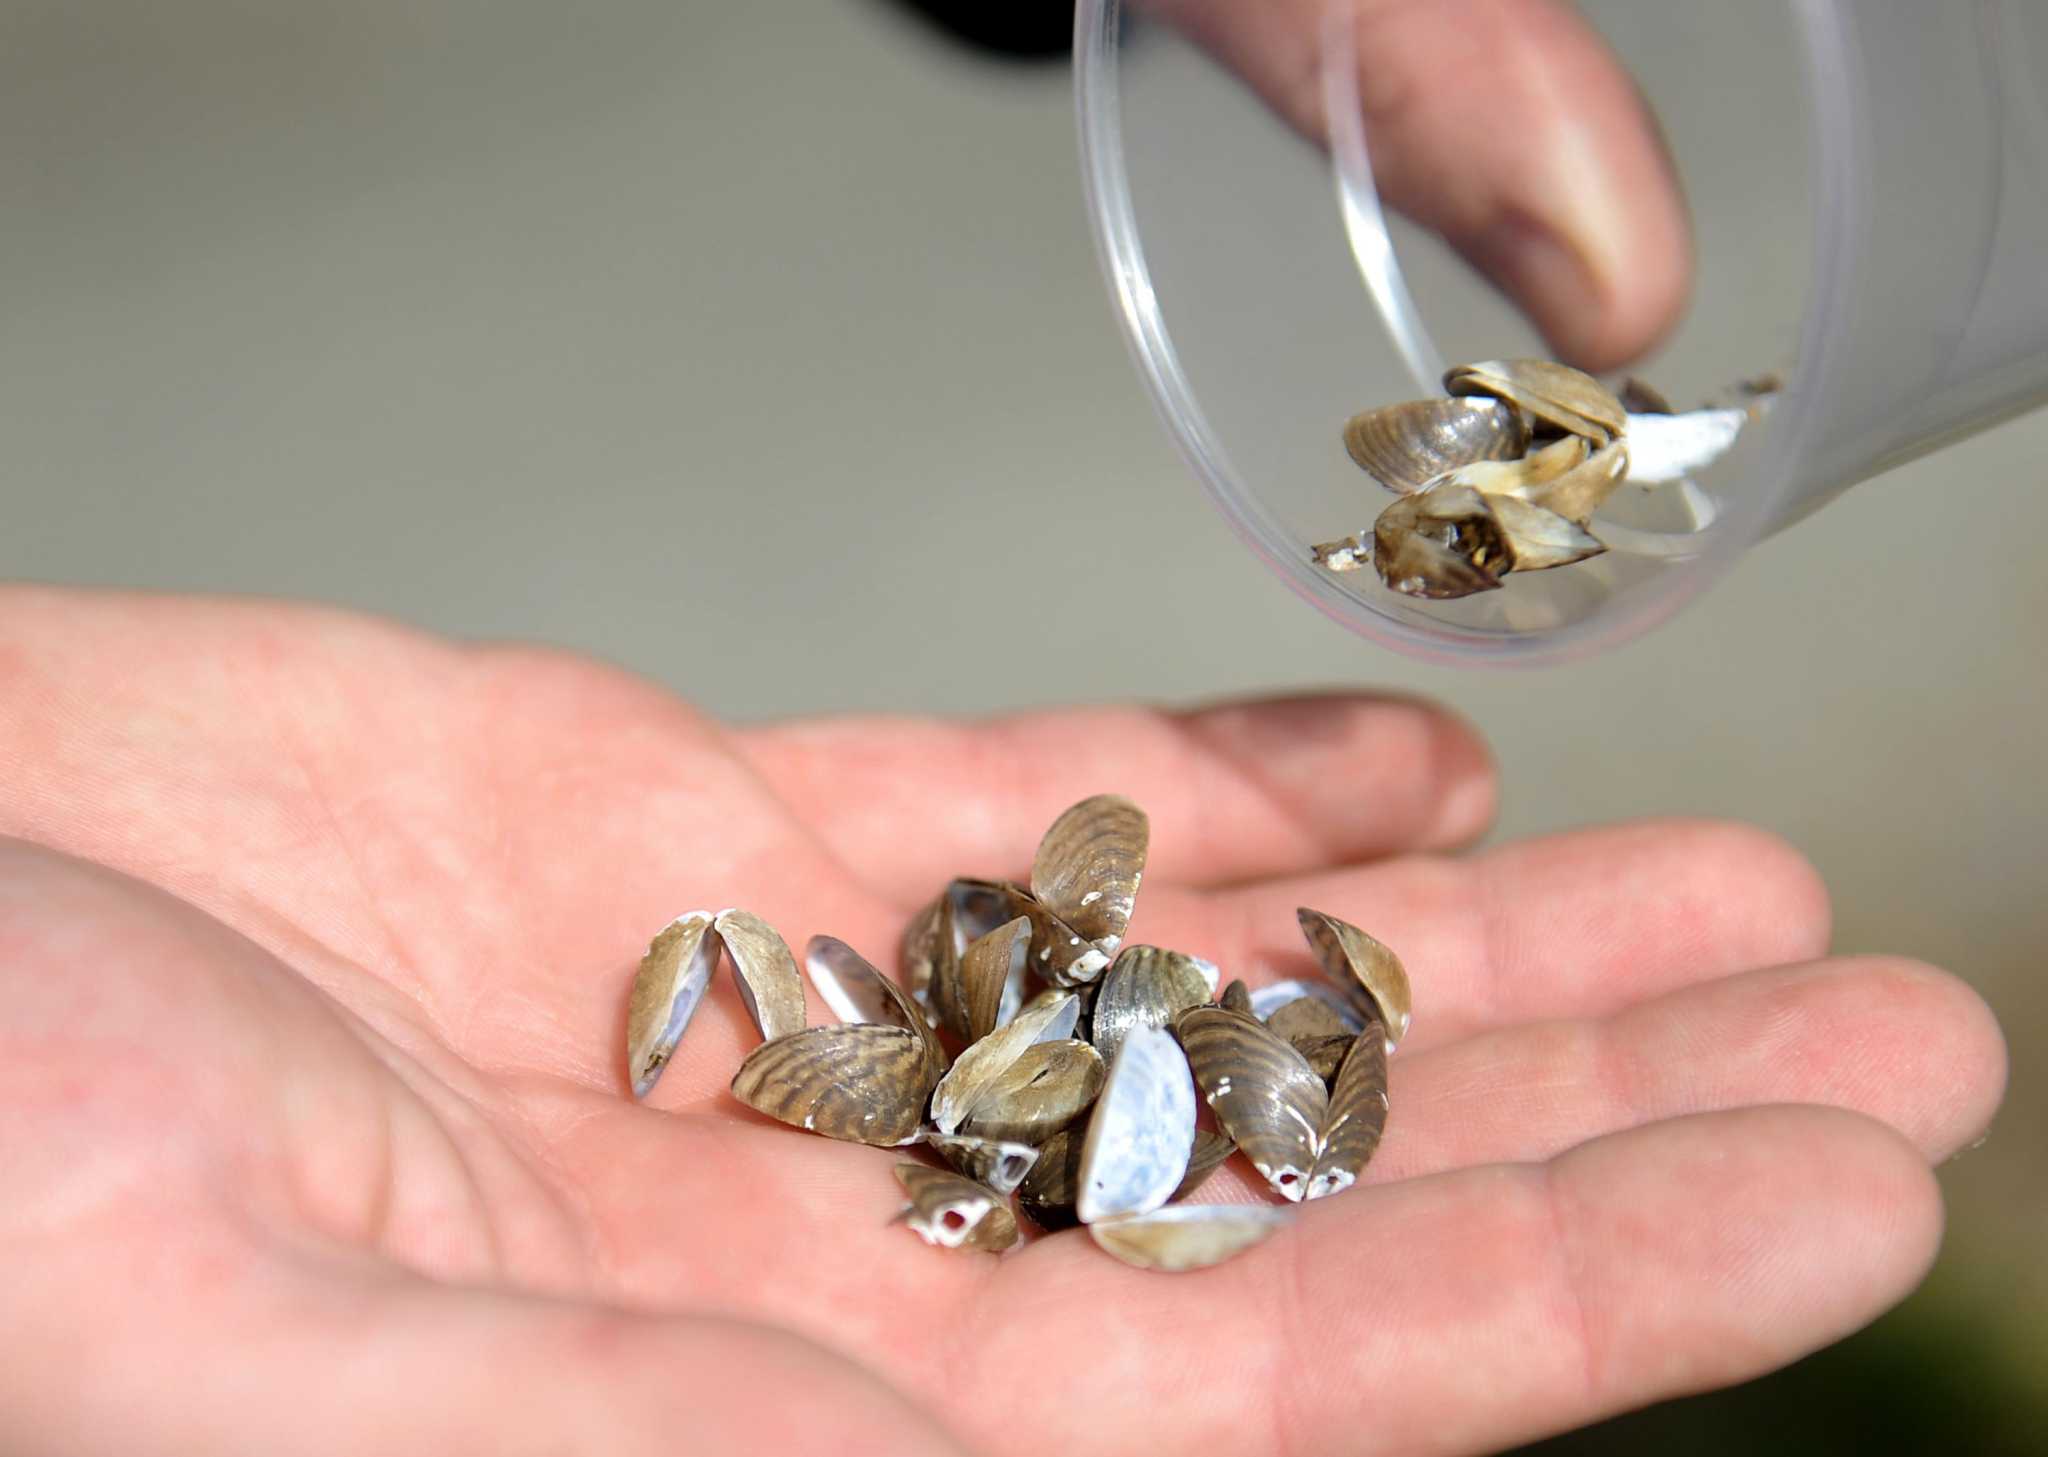 DEC warns aquarium owners of invasive Zebra Mussels found in 'moss balls